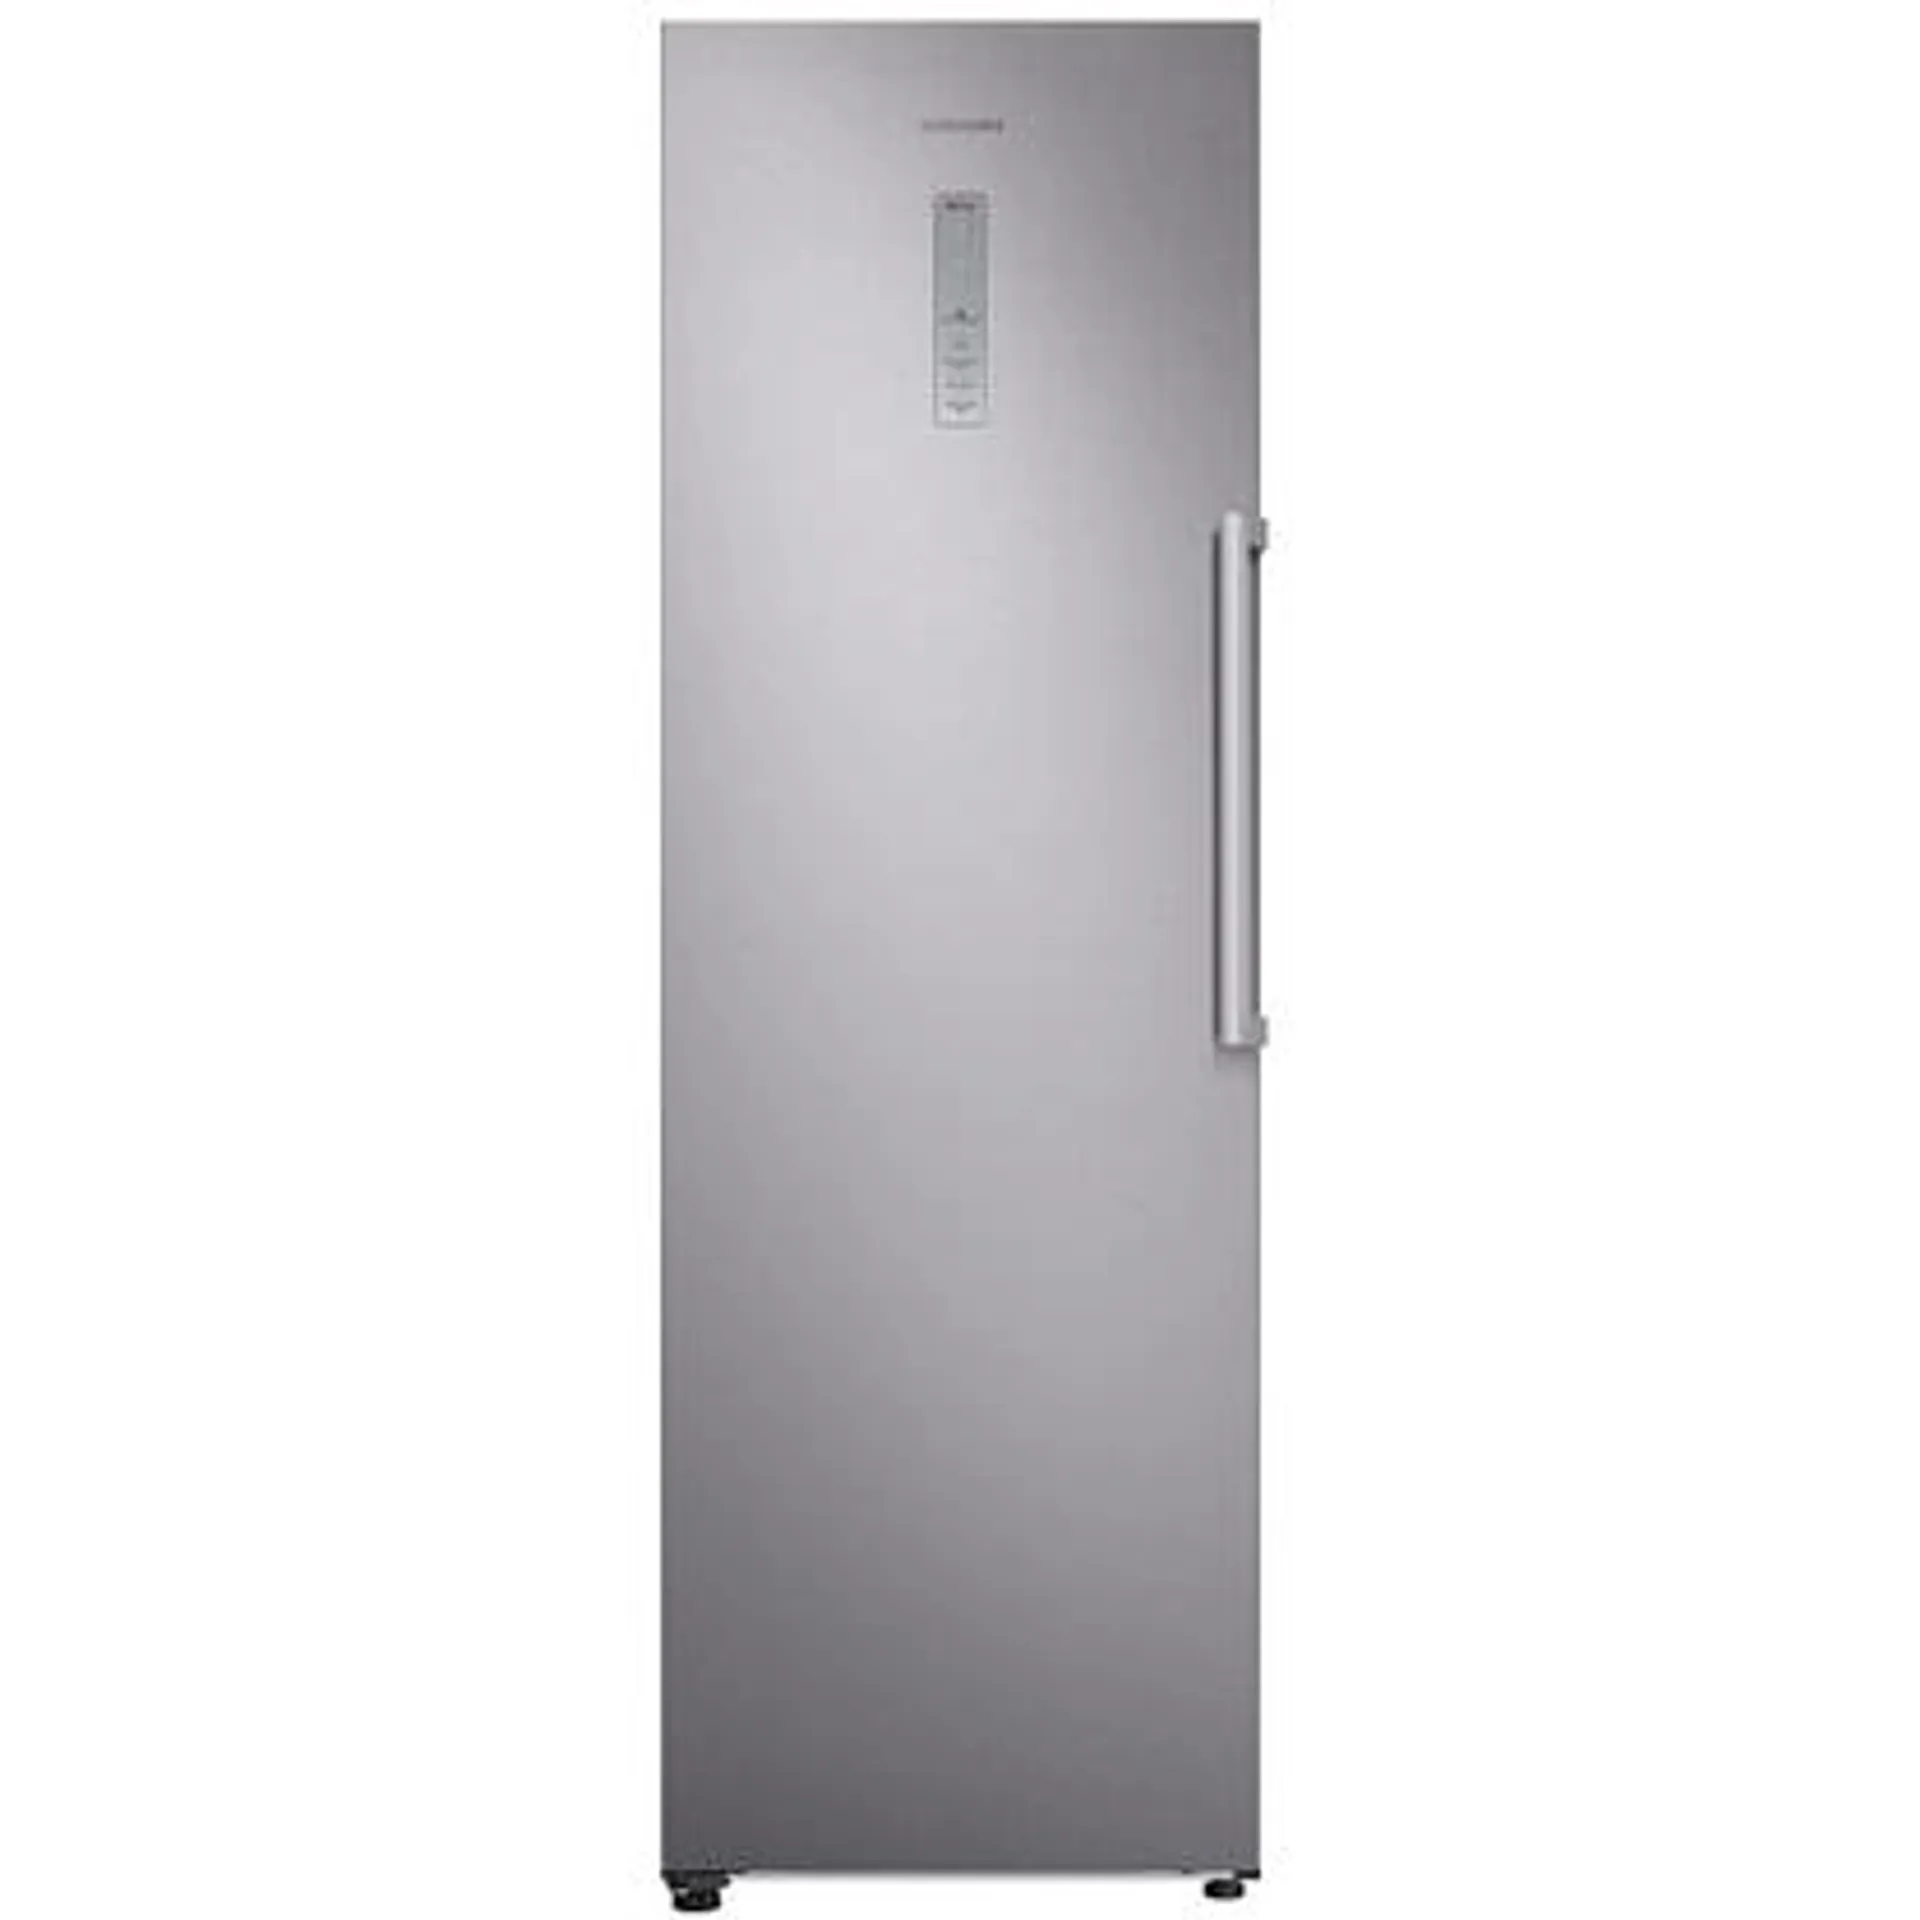 Samsung RZ32M7125SA 60cm Freestanding Frost Free Freezer – SILVER